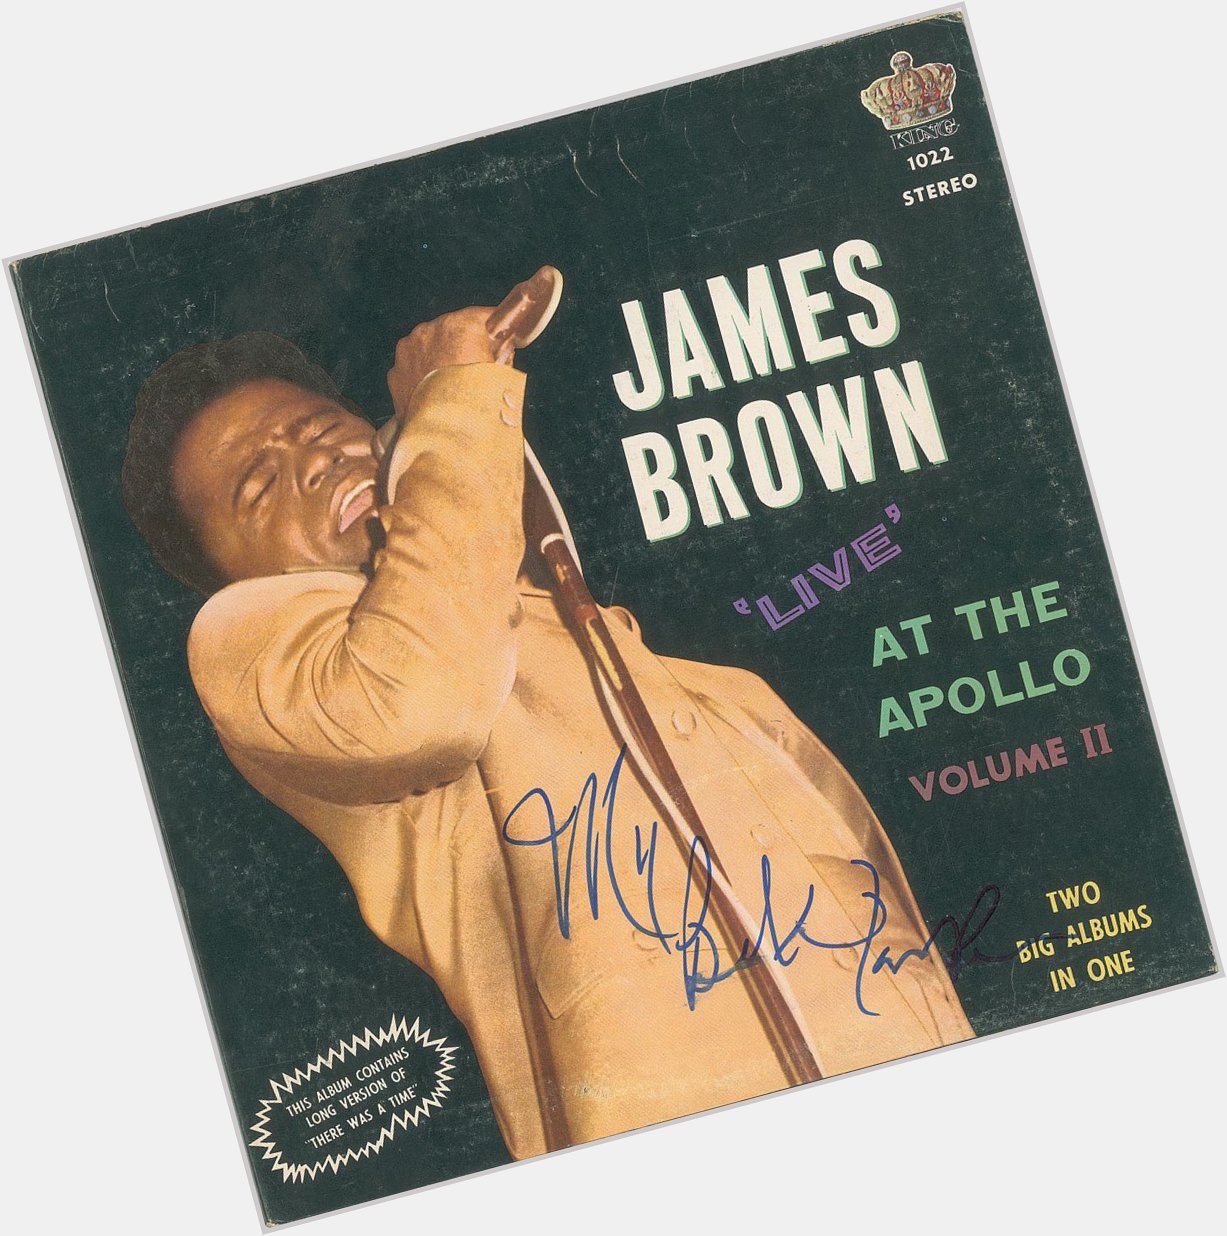 Happy birthday, James Brown! 
Autographed album:   